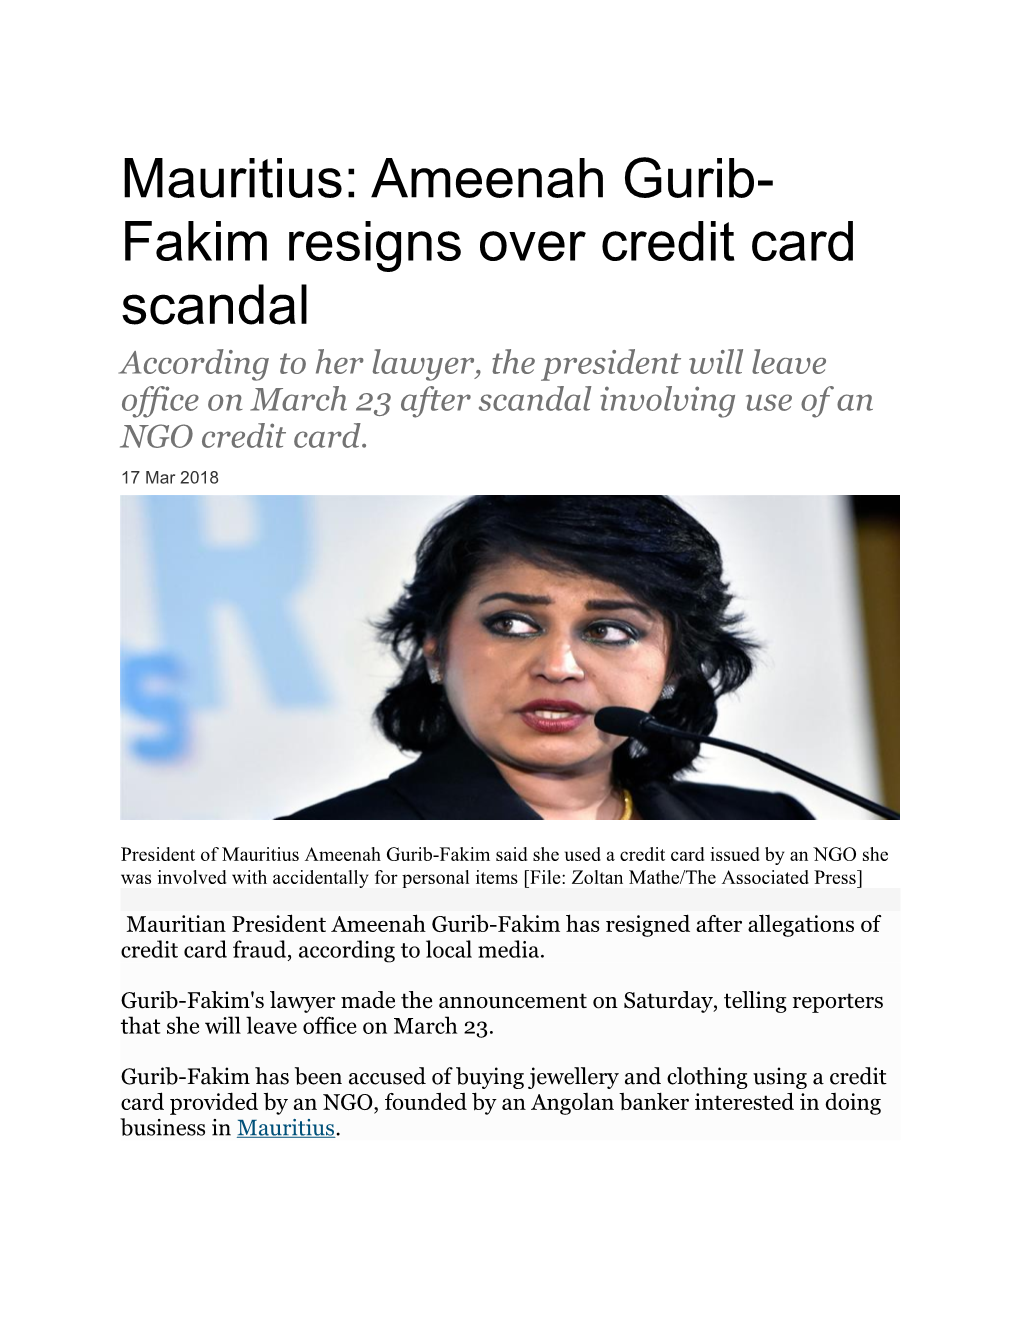 Mauritius: Ameenahgurib-Fakim Resigns Over Credit Card Scandal